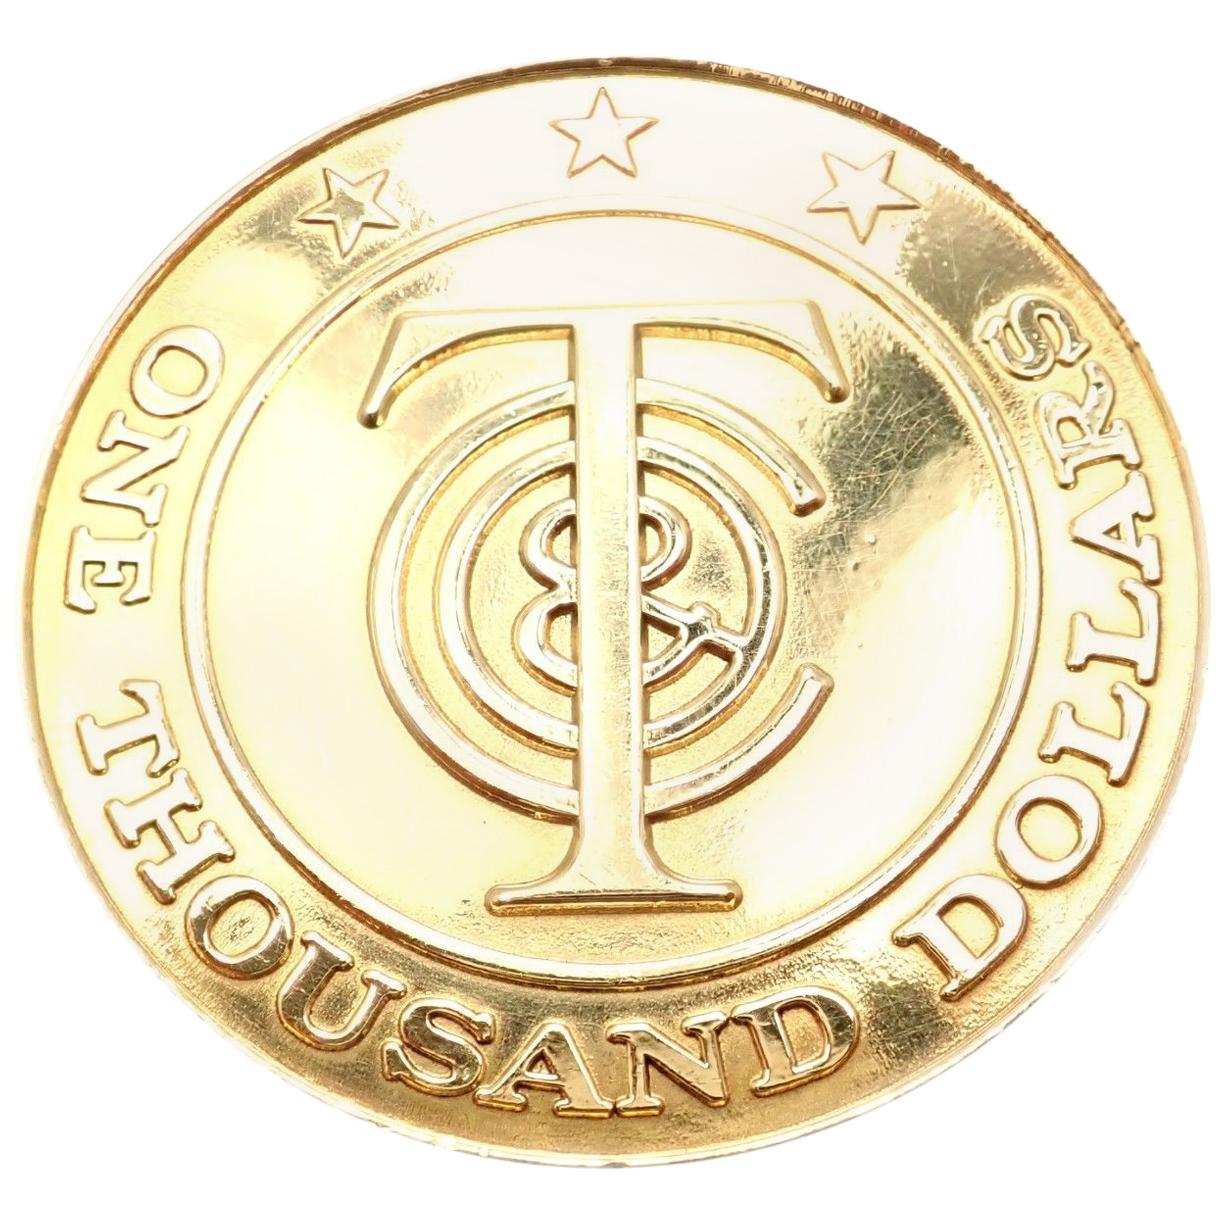 Tiffany & Co. “Tiffany Money” $1, 000 Solid Yellow Gold Token Coin